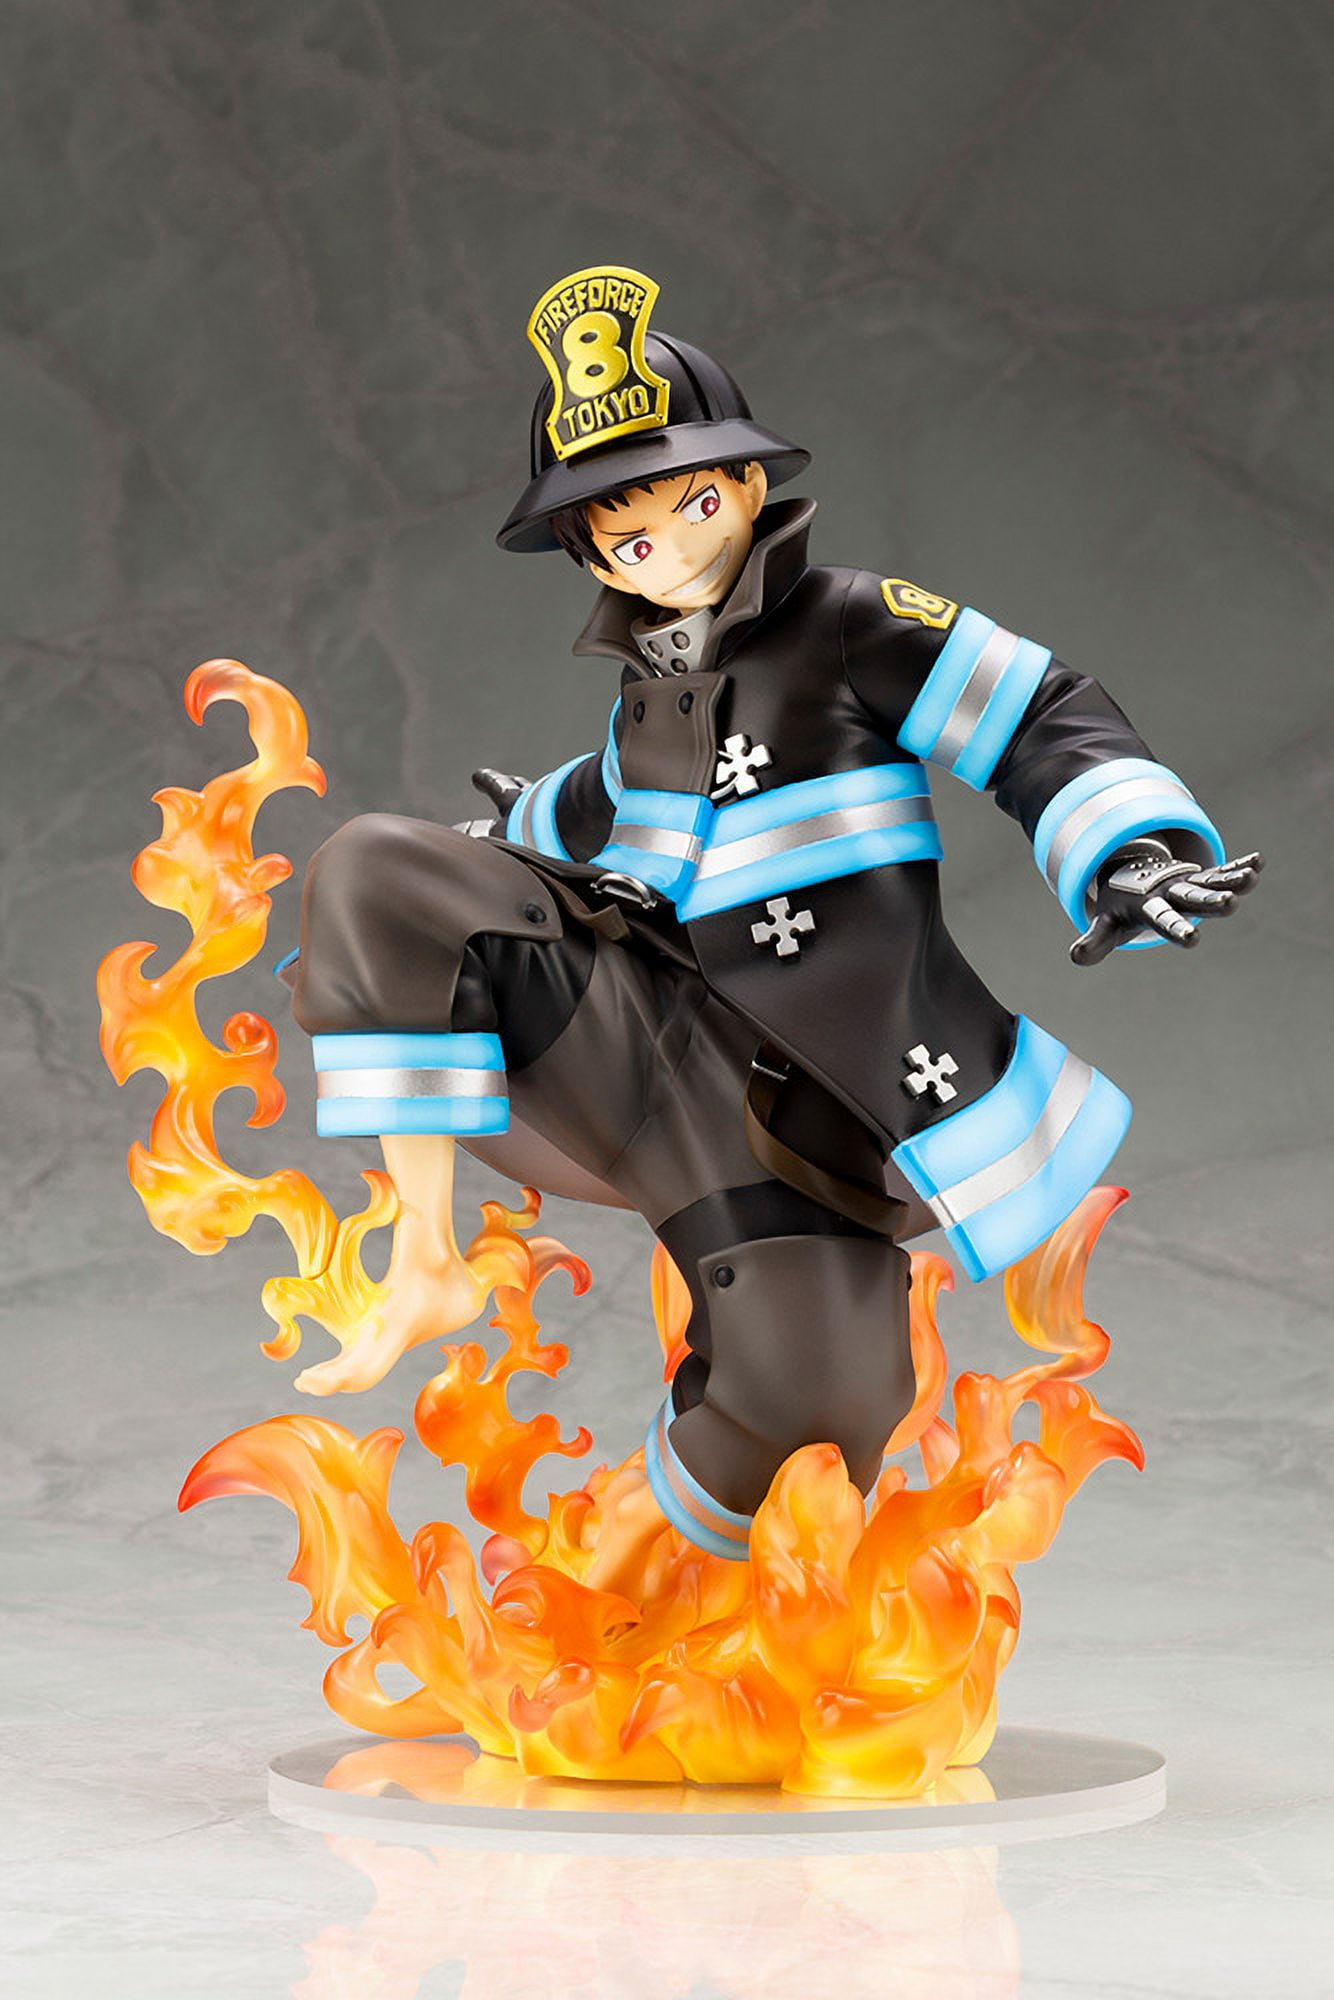 Fire Force Mini Anime 03 ( ONA ) : r/firebrigade